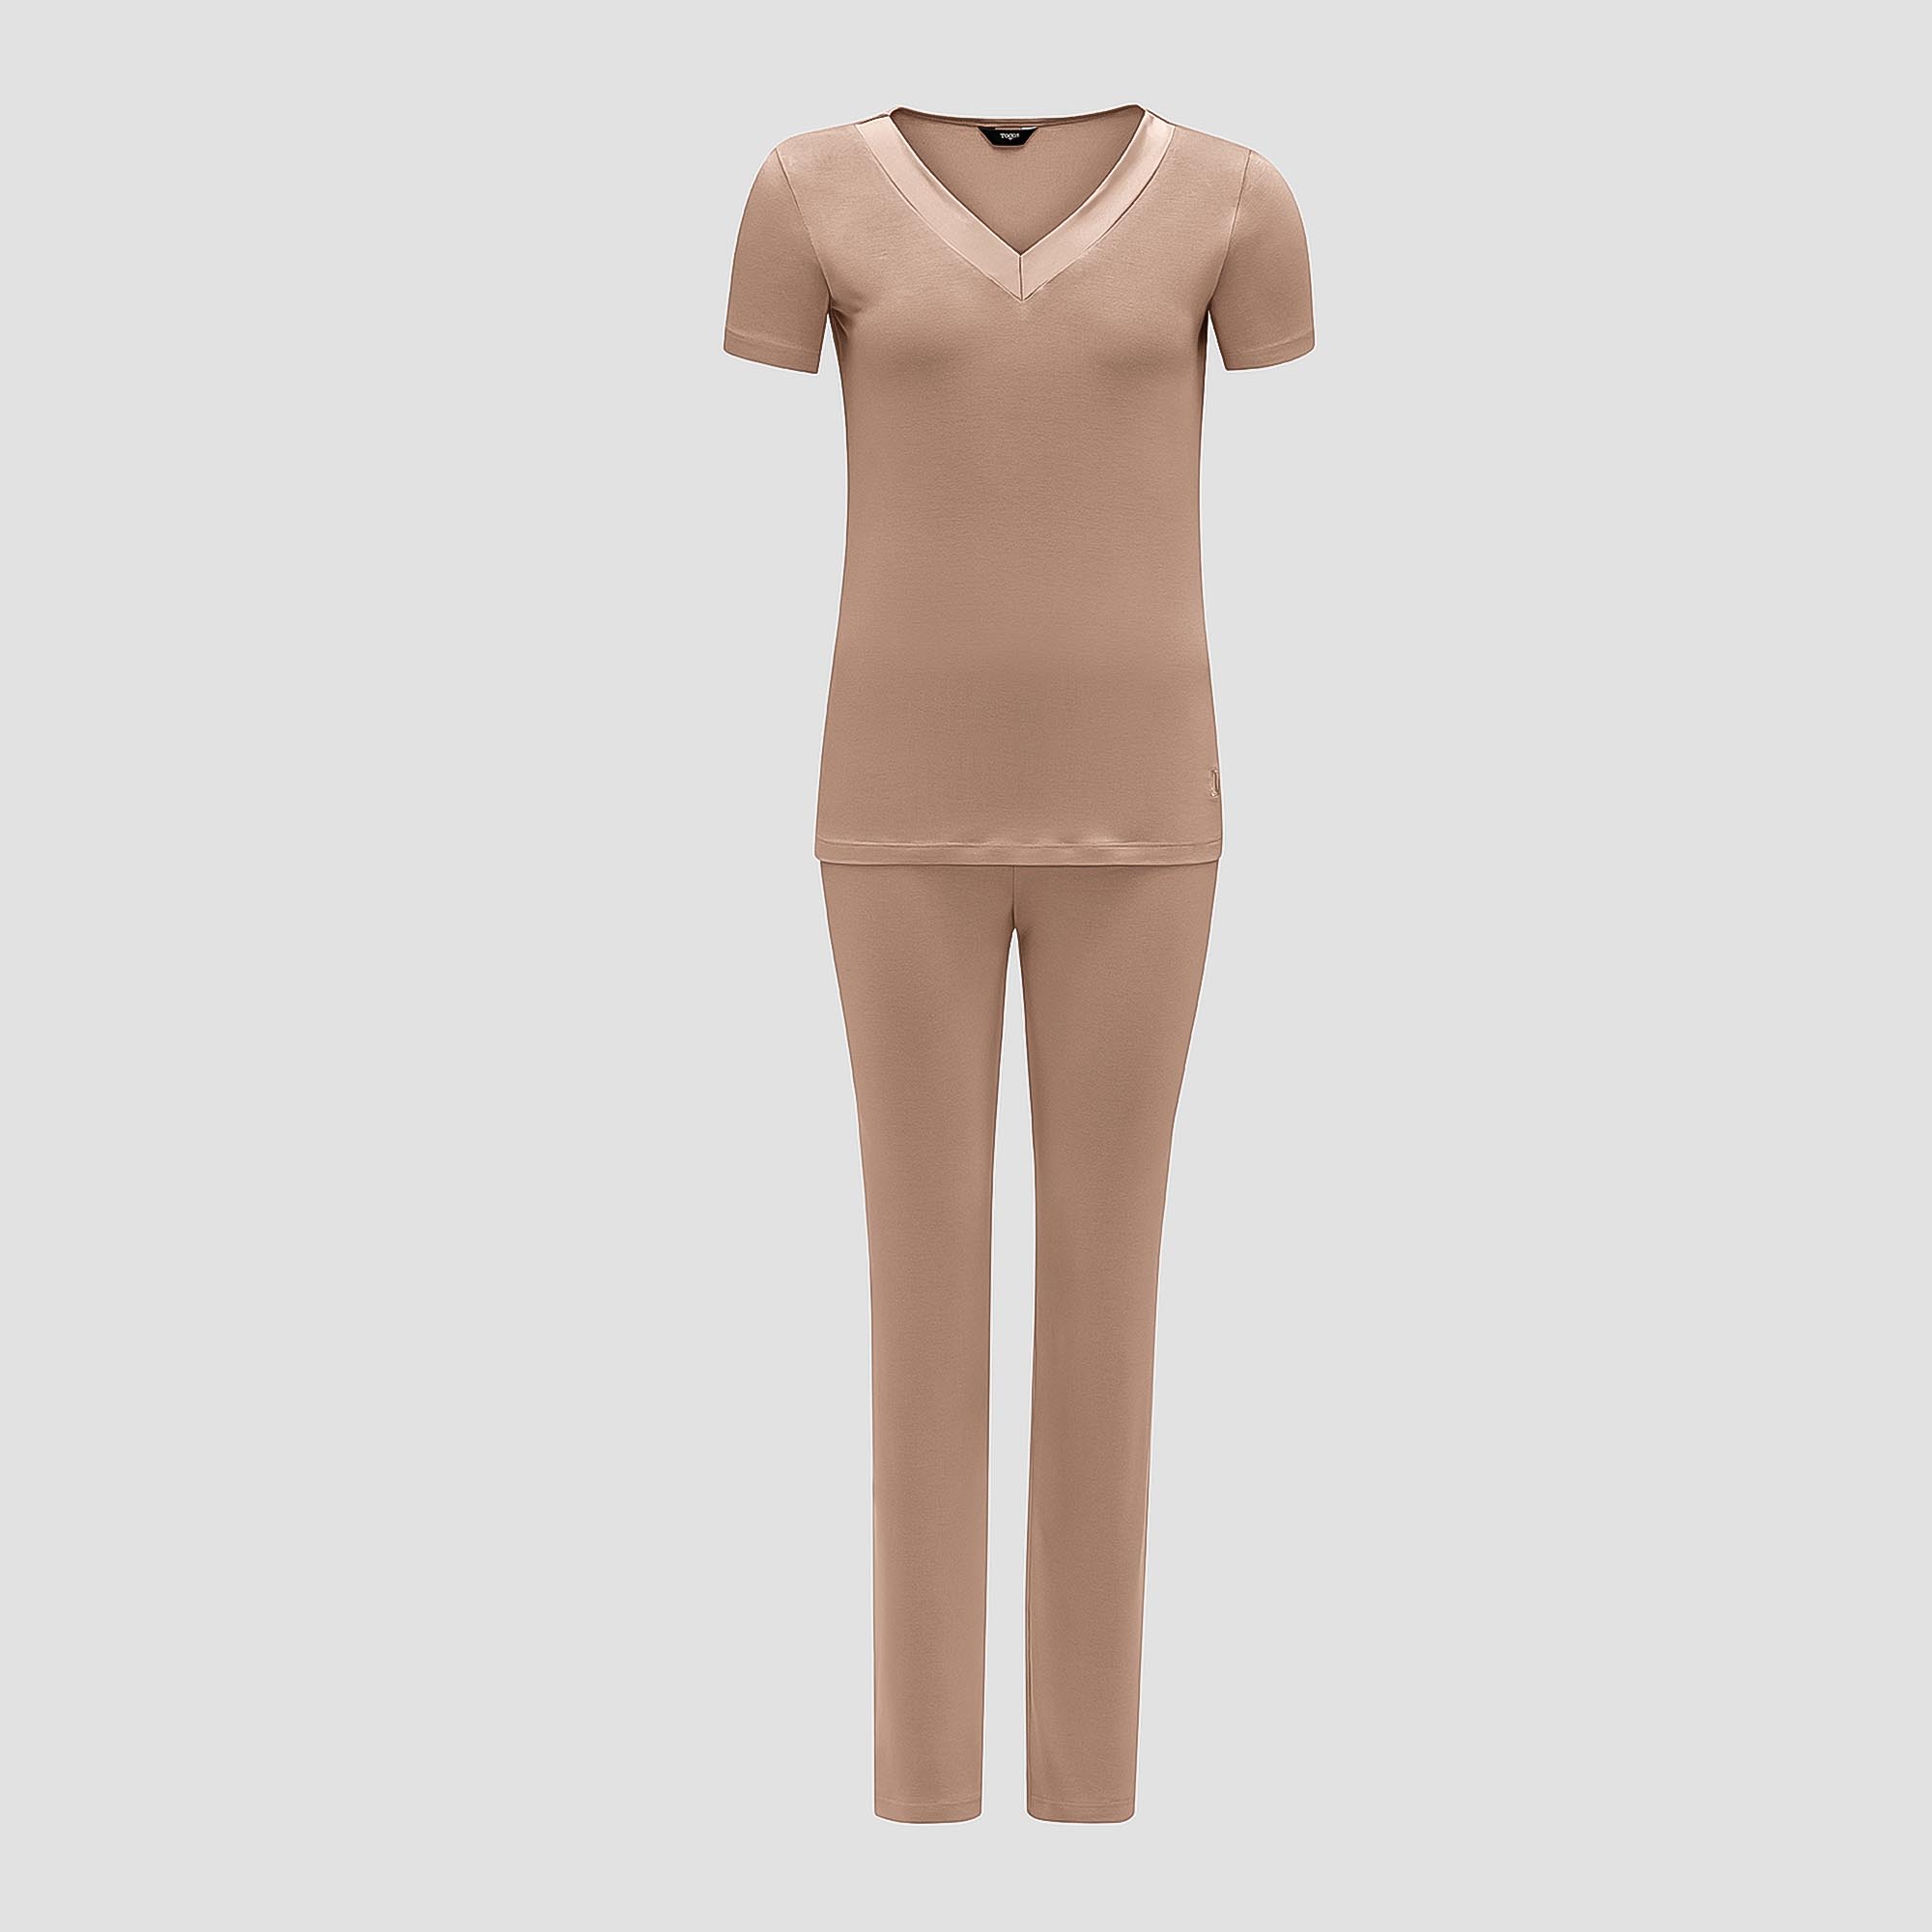 Пижама Togas Ингелла розово-бежевая женская XXL(52) 2 предмета пижама футболка